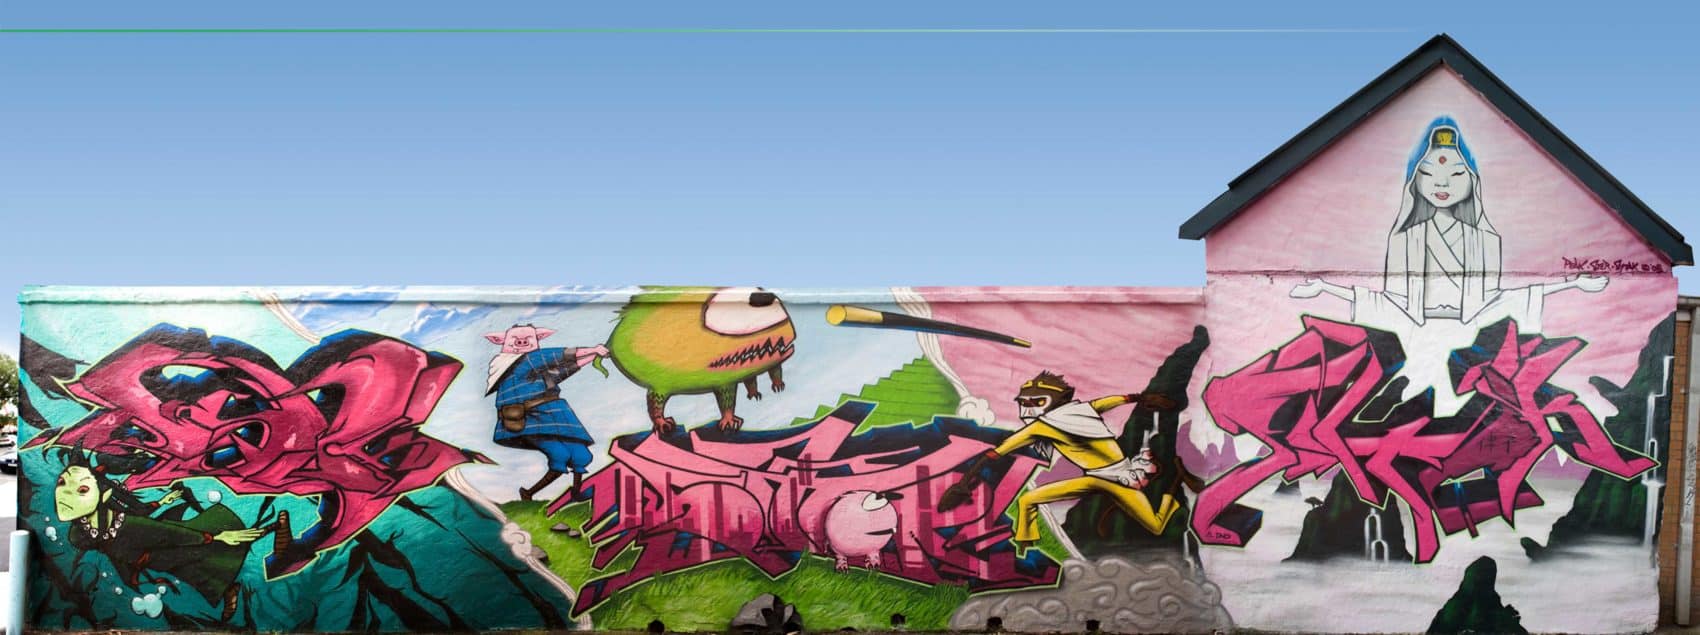 graffiti production sydney